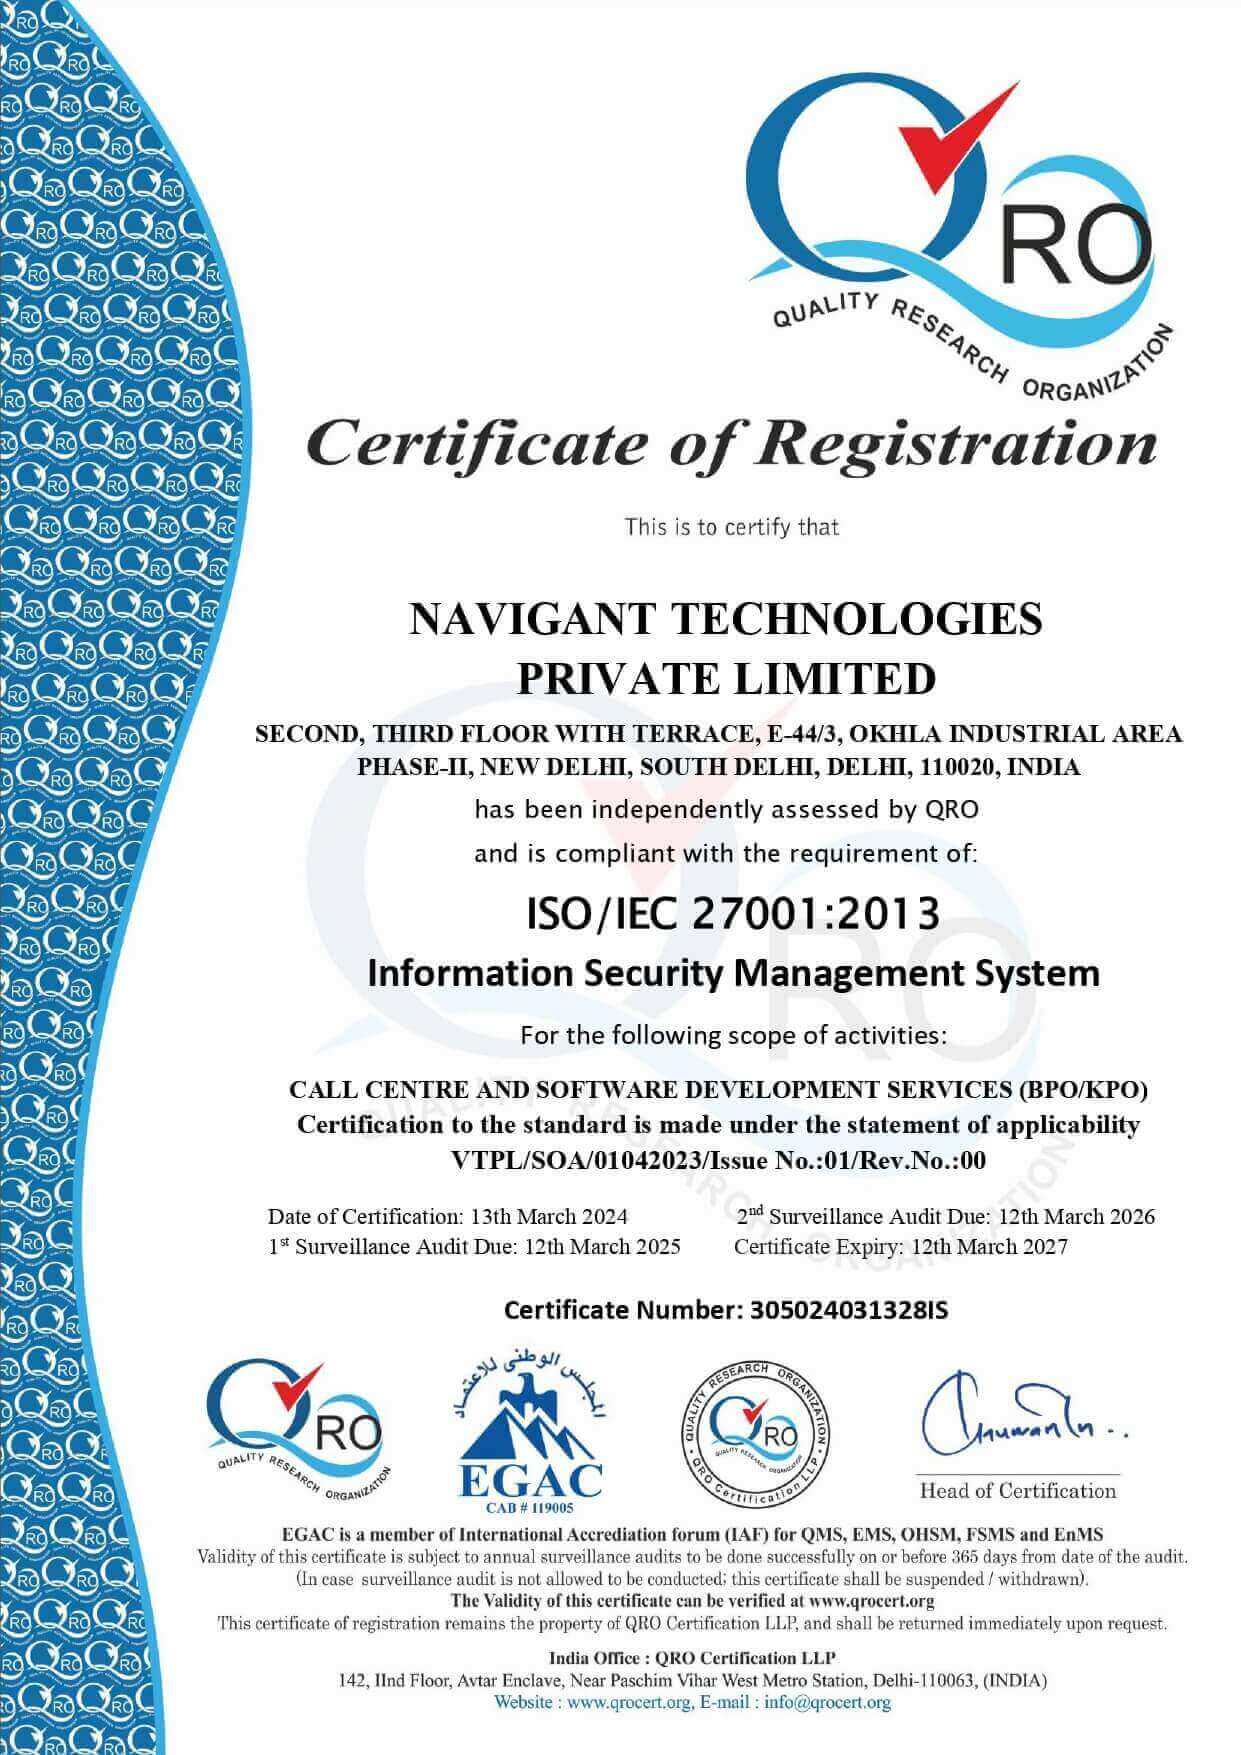 Certificate of Registration-ISMS